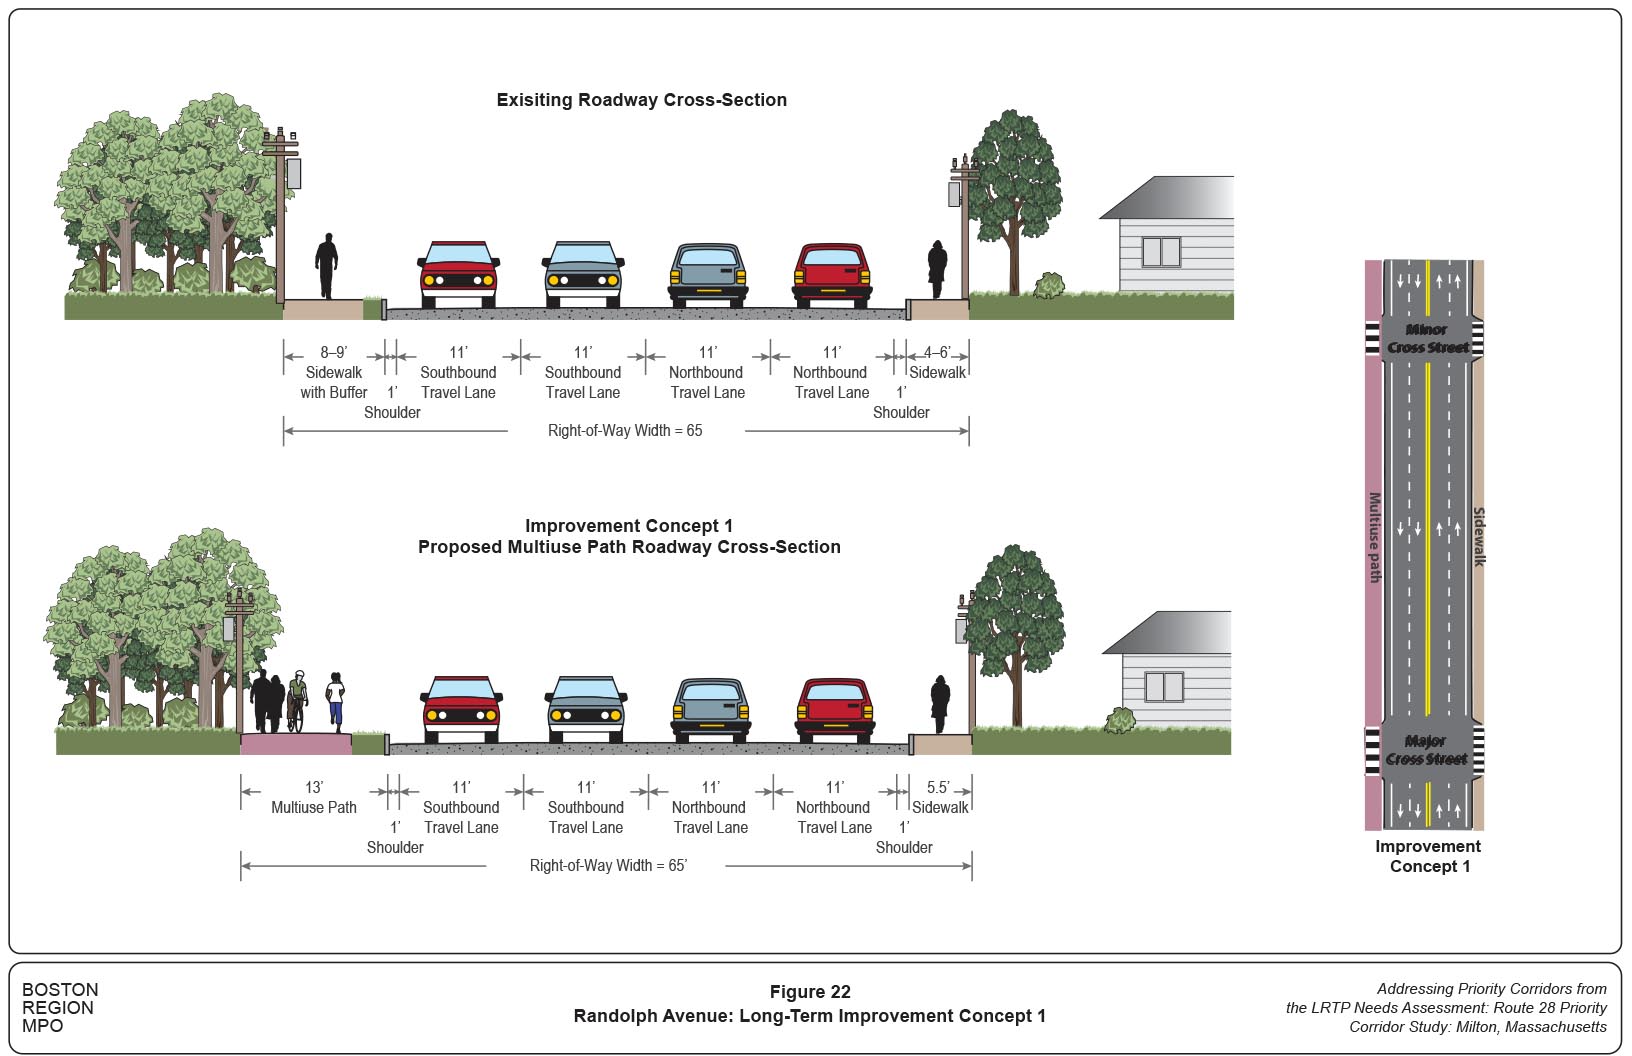 Figure 22
Randolph Avenue: Long-Term Improvement Concept 1
Figure 22 shows the cross-sectional configuration of Randolph Avenue long-term improvement Concept 1.
